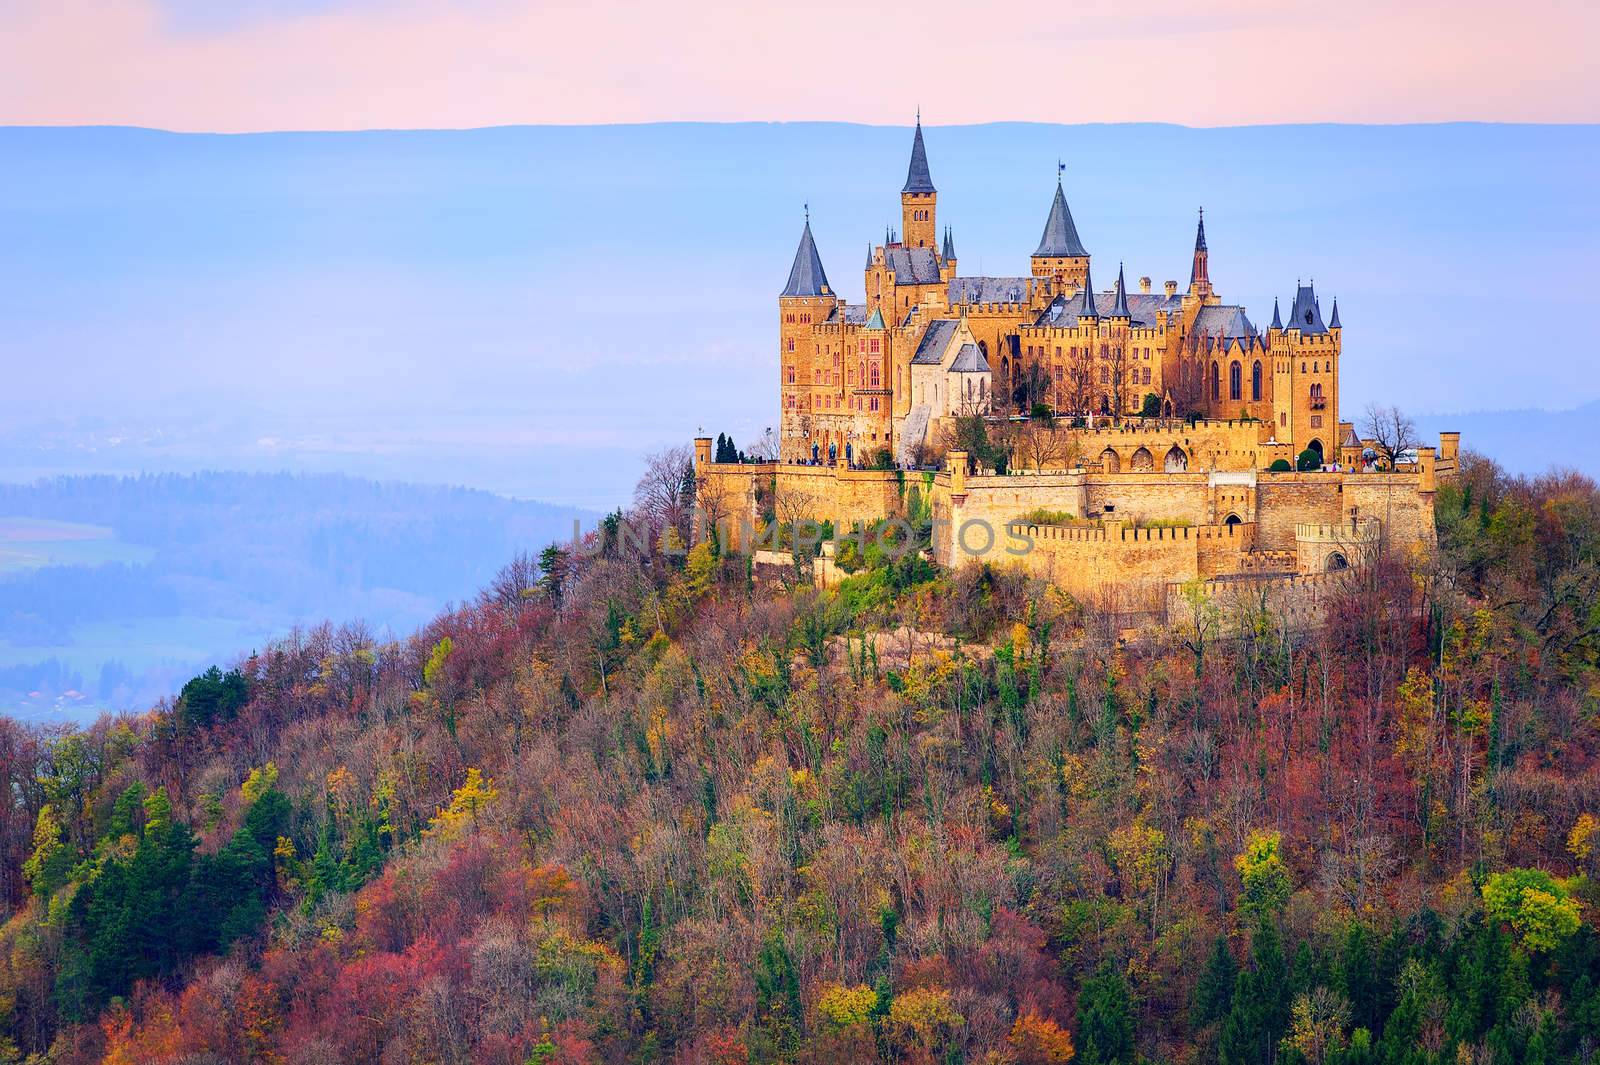 Hohenzollern castle, Stuttgart, Germany by GlobePhotos